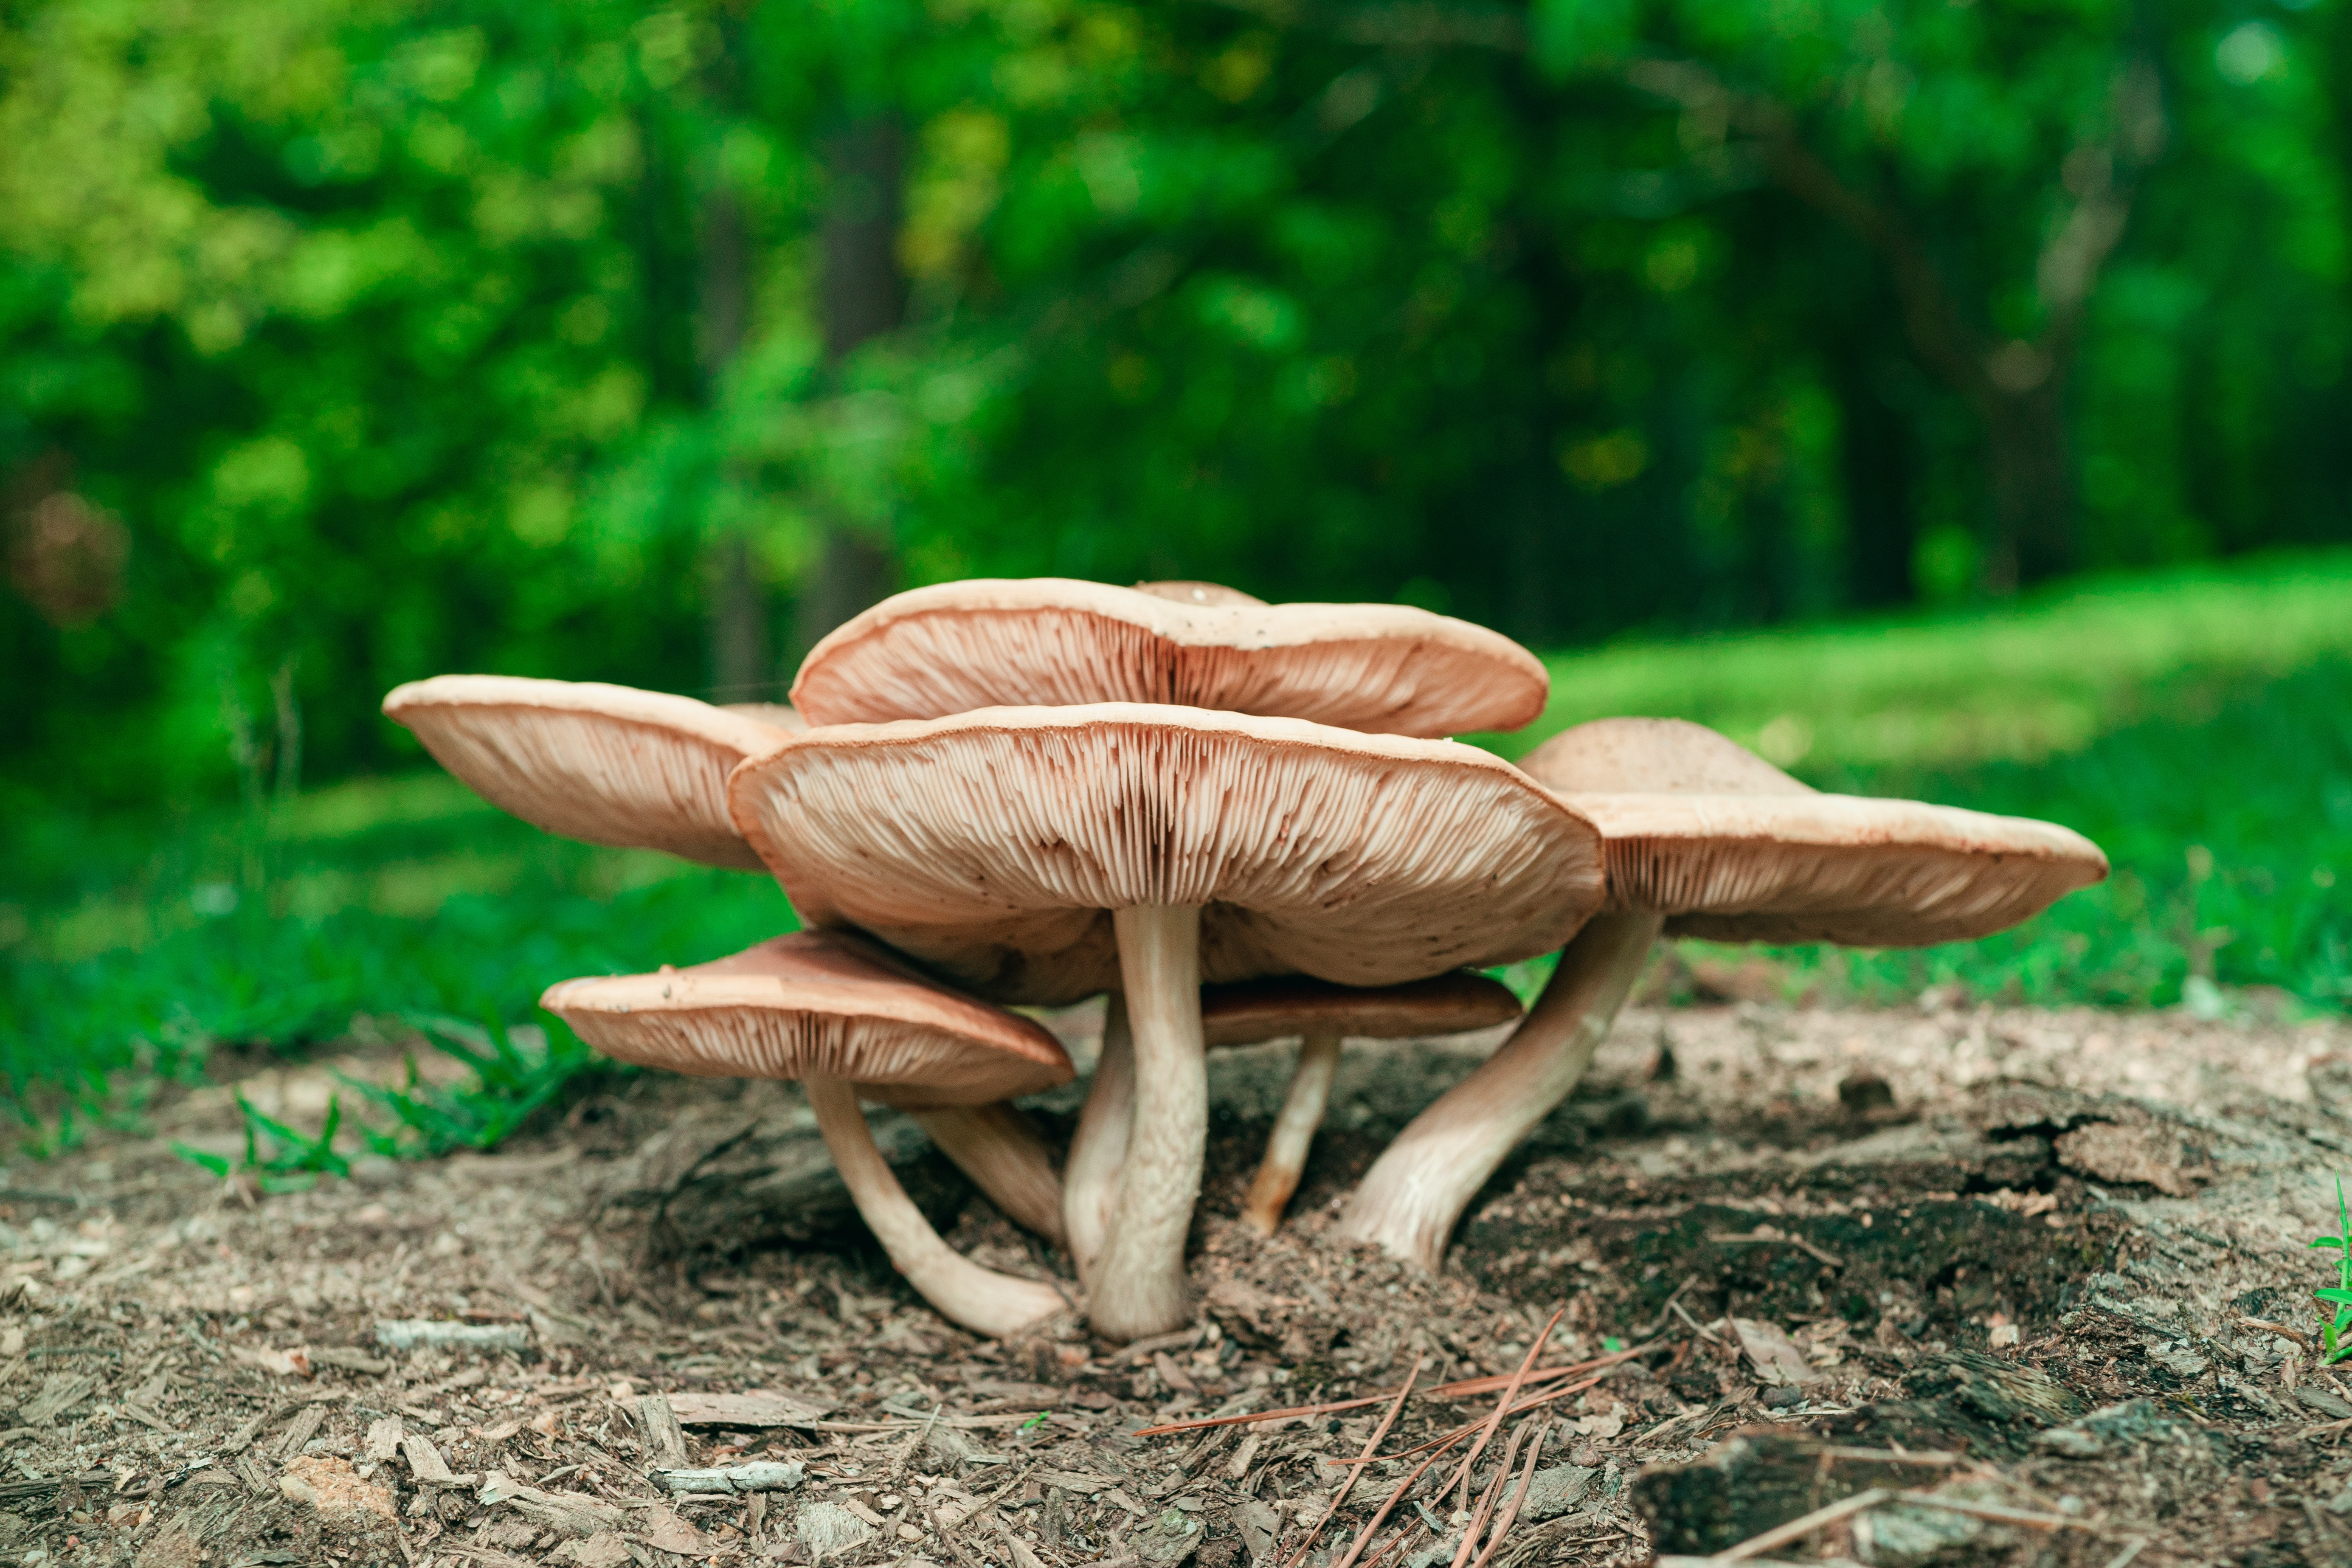 How do mushroom supplements make you feel?